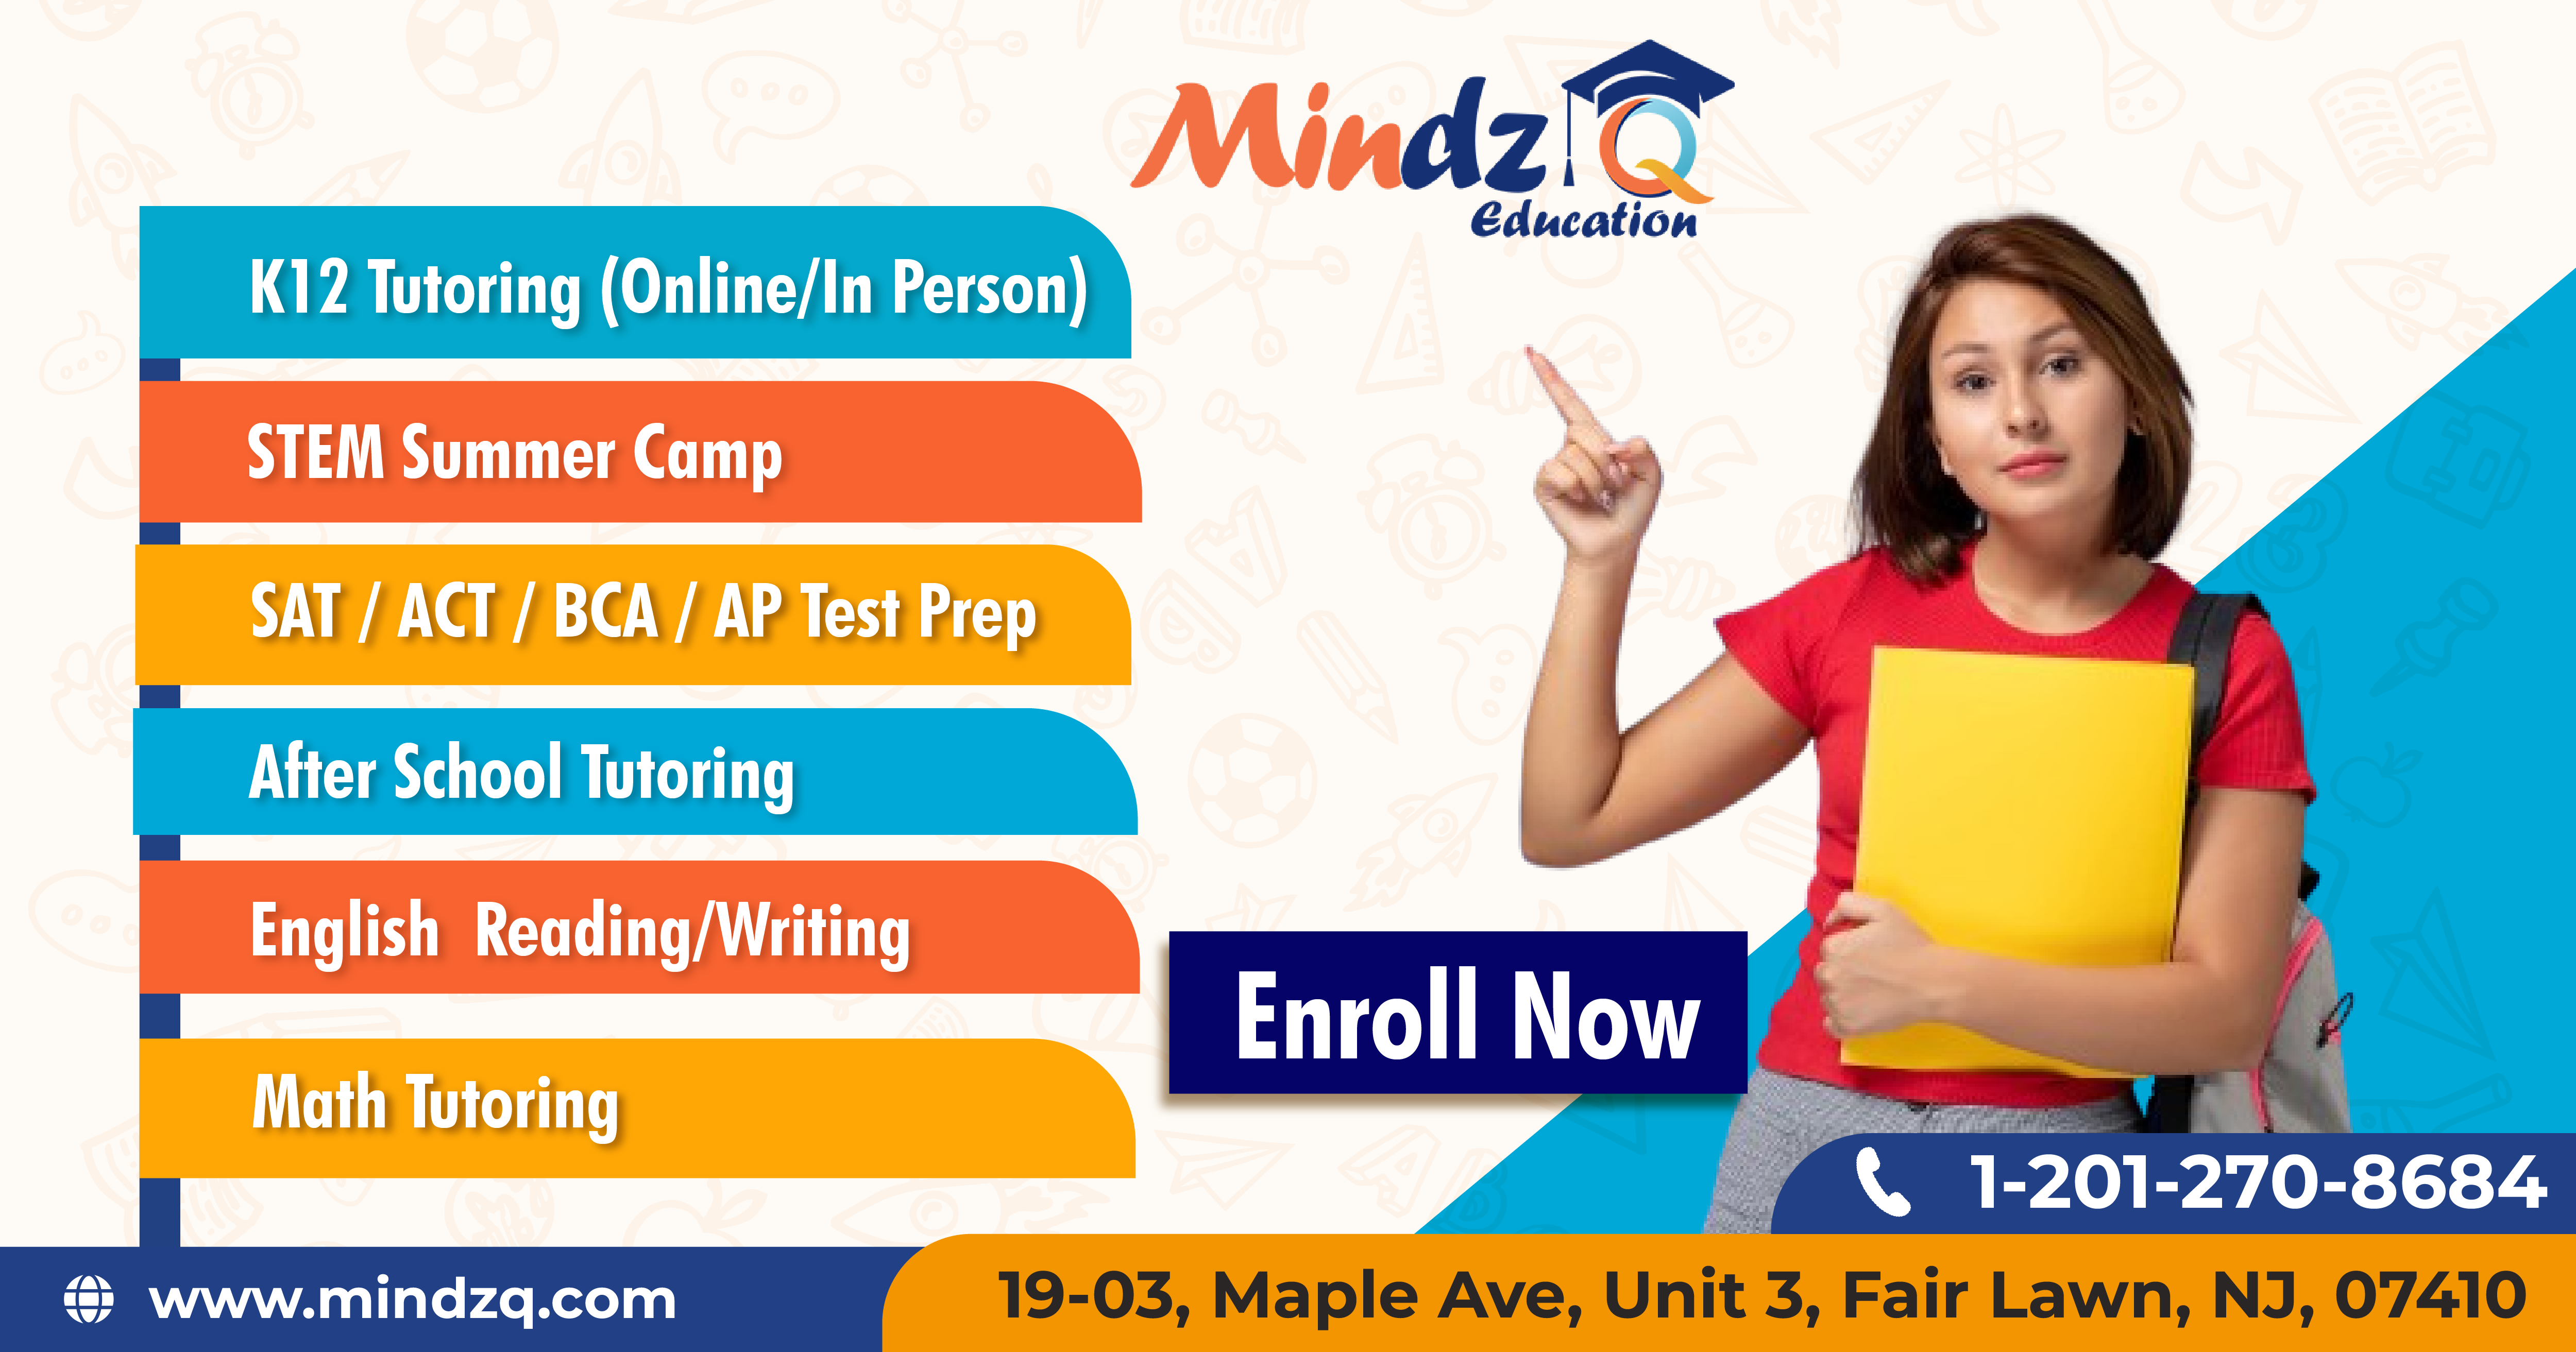 Digital SAT | Digital SAT Practice and Preparation | MindzQ Education